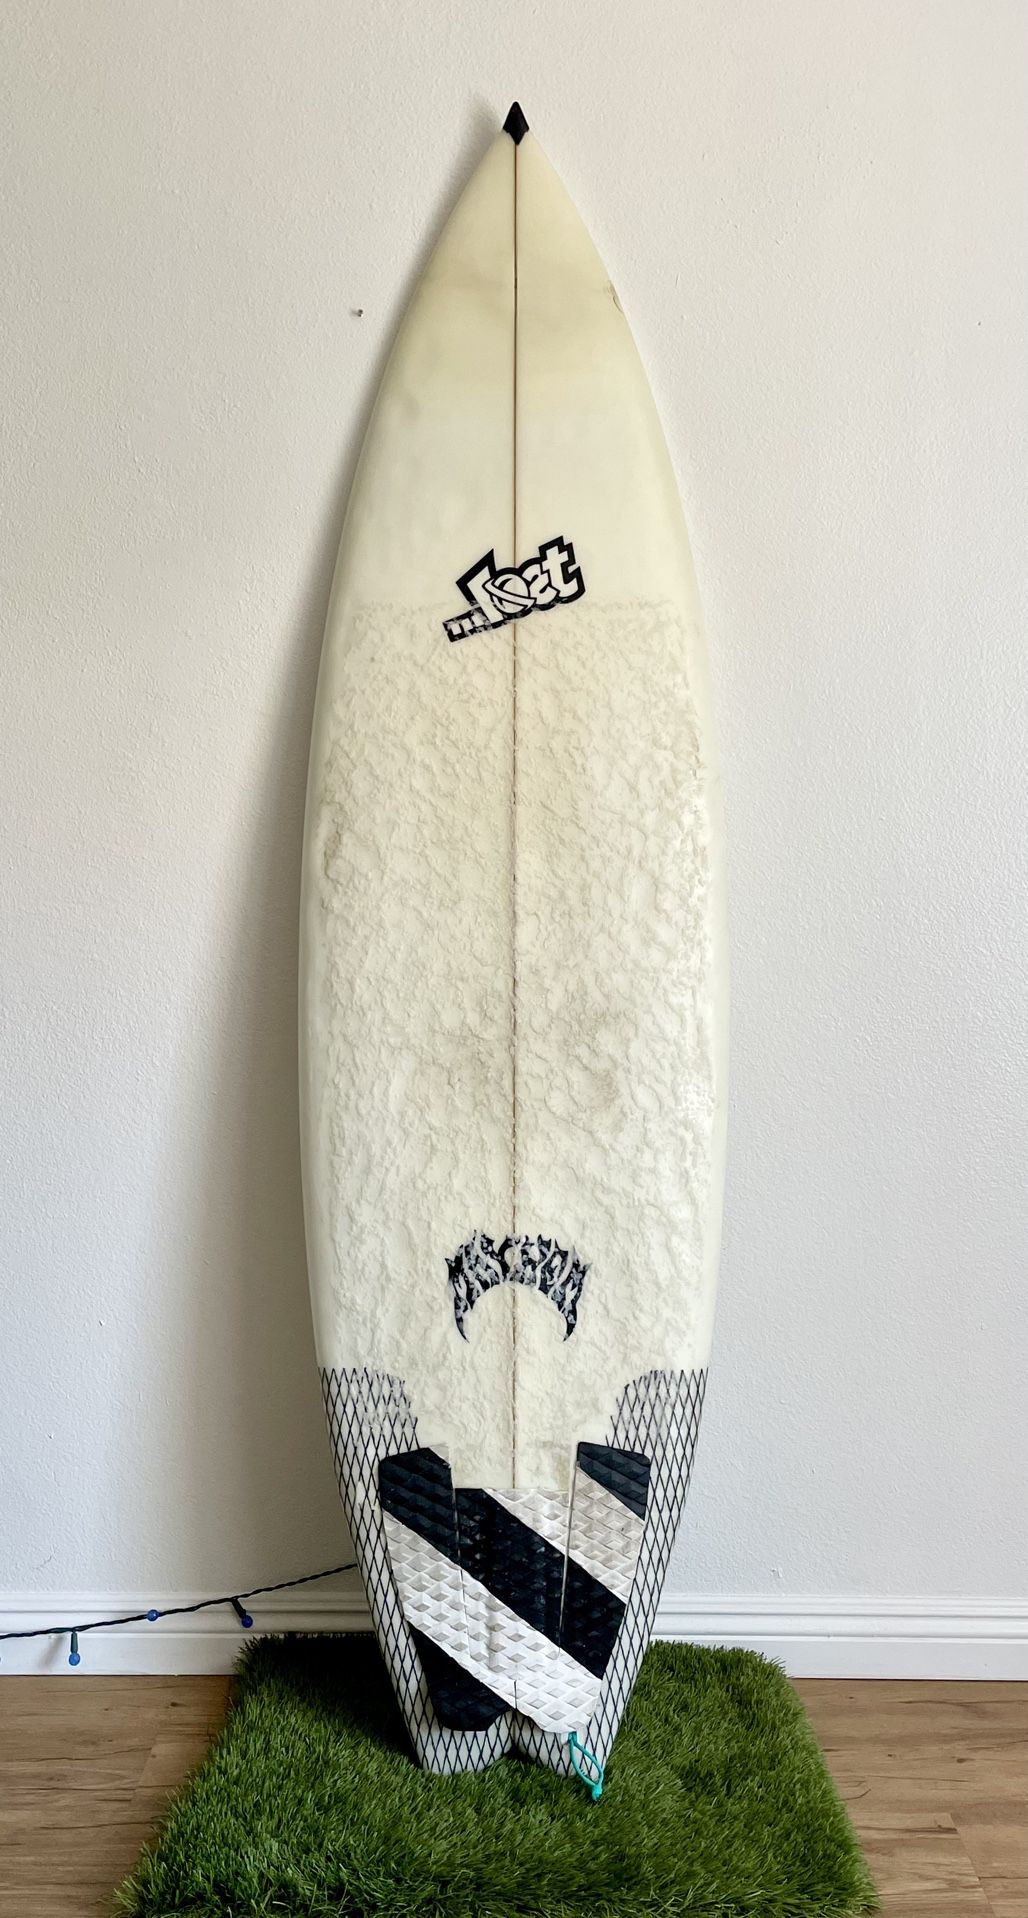 Hybrid Fish Surfboard Shortboard